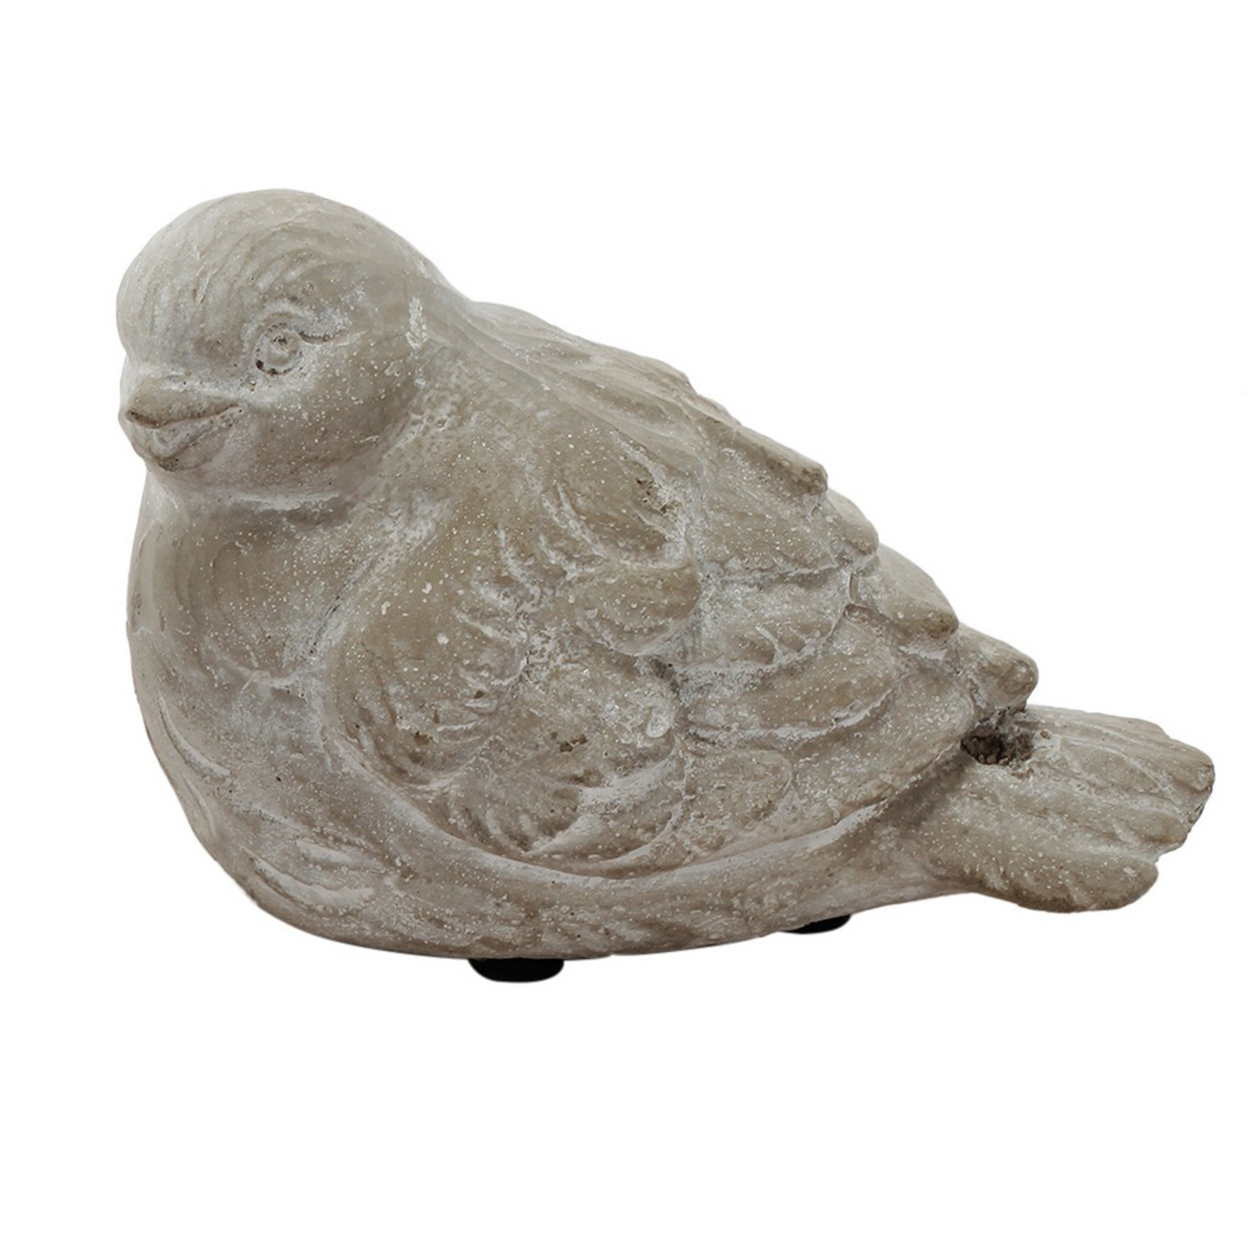 Kima Set Of 2 Sitting Resting Birds Accent Decor, Weathered Gray Ceramic- Saltoro Sherpi